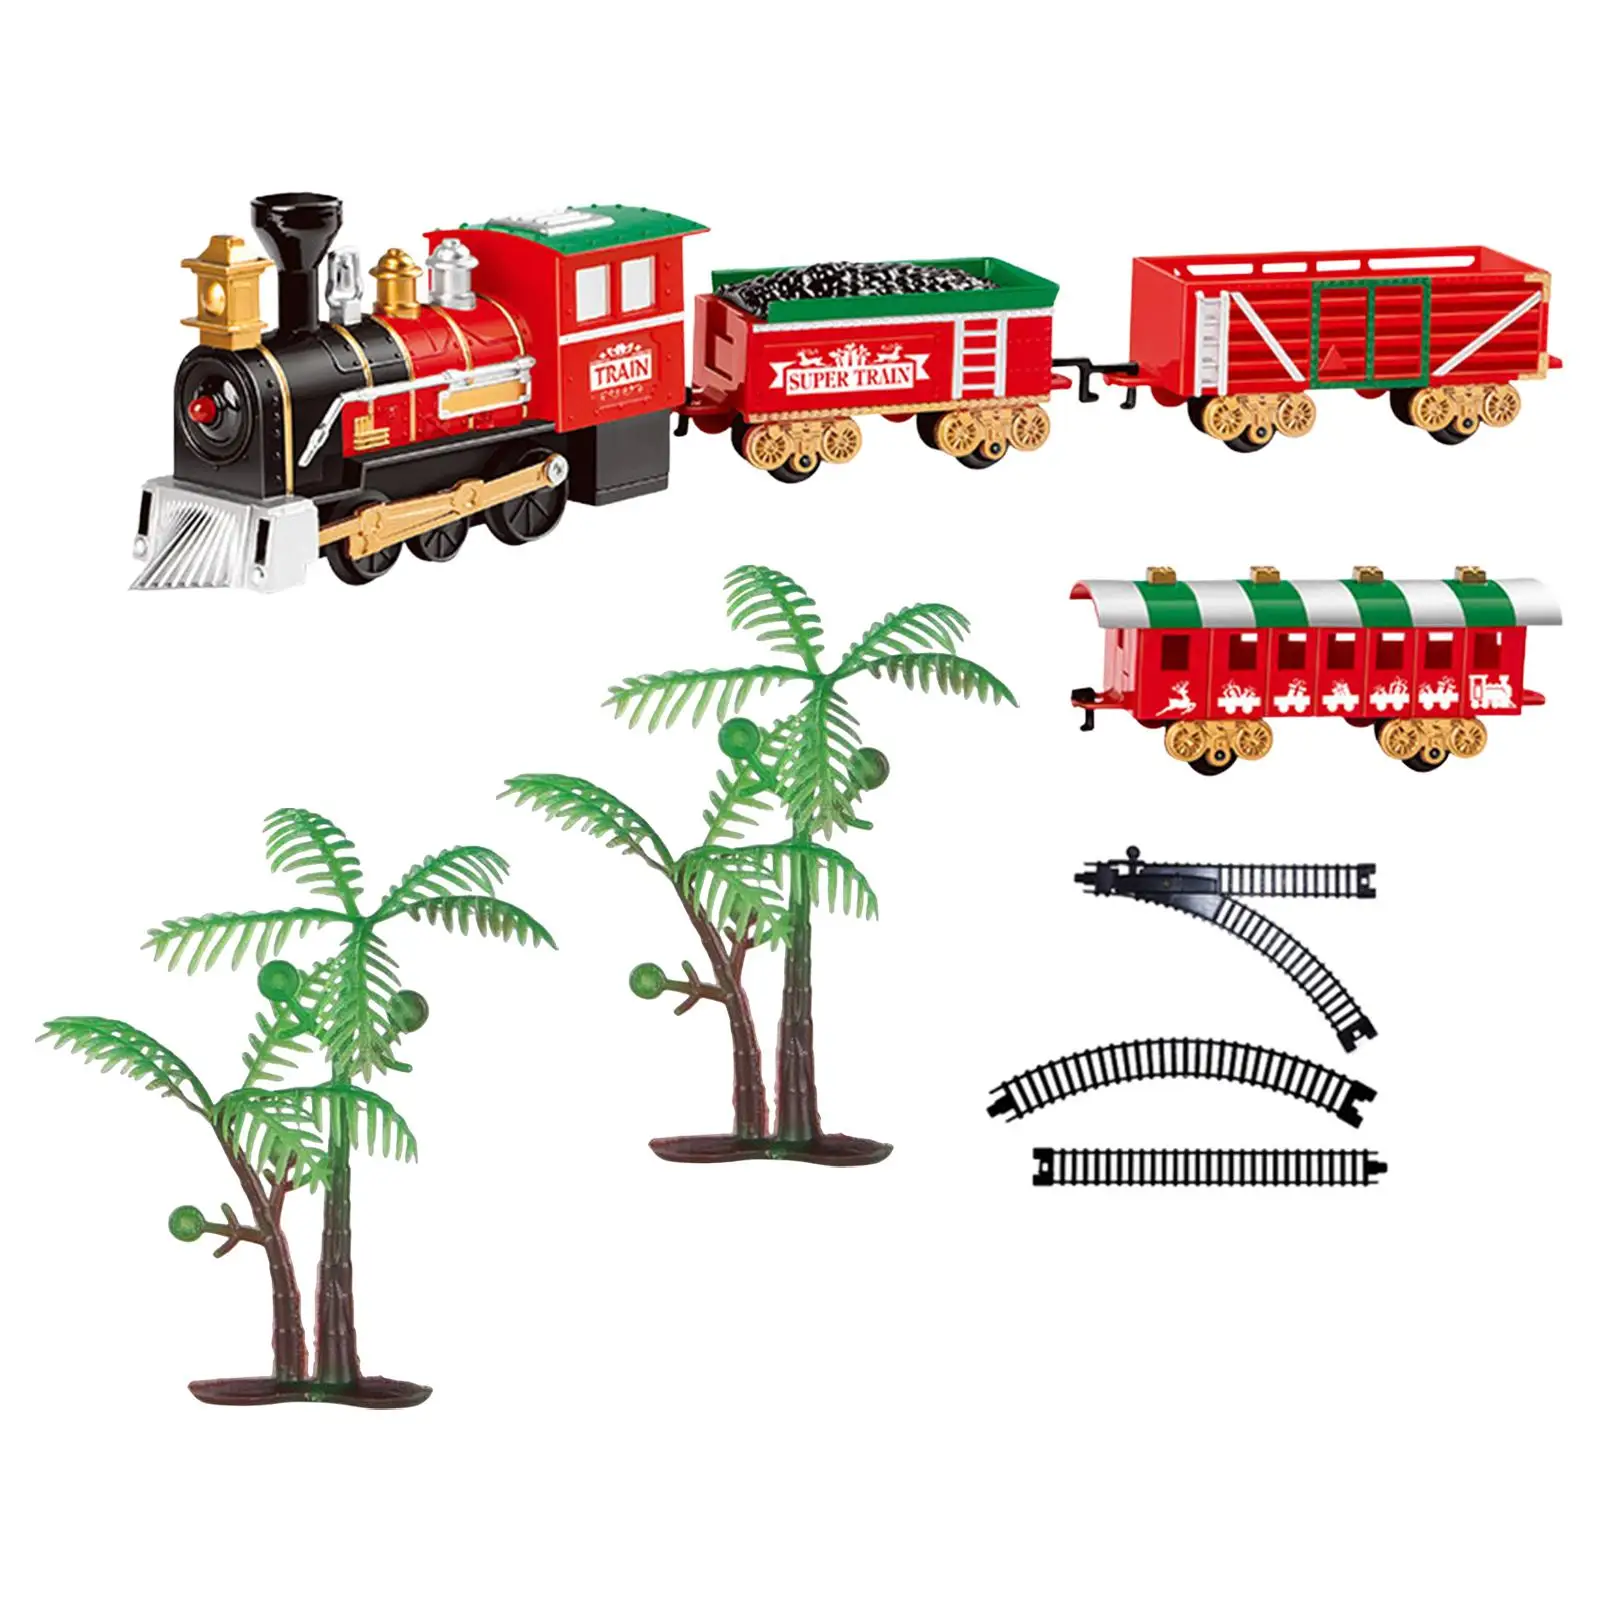 Christmas Tree Train Set Building Construction Set Railway Track Set for Girls Boys